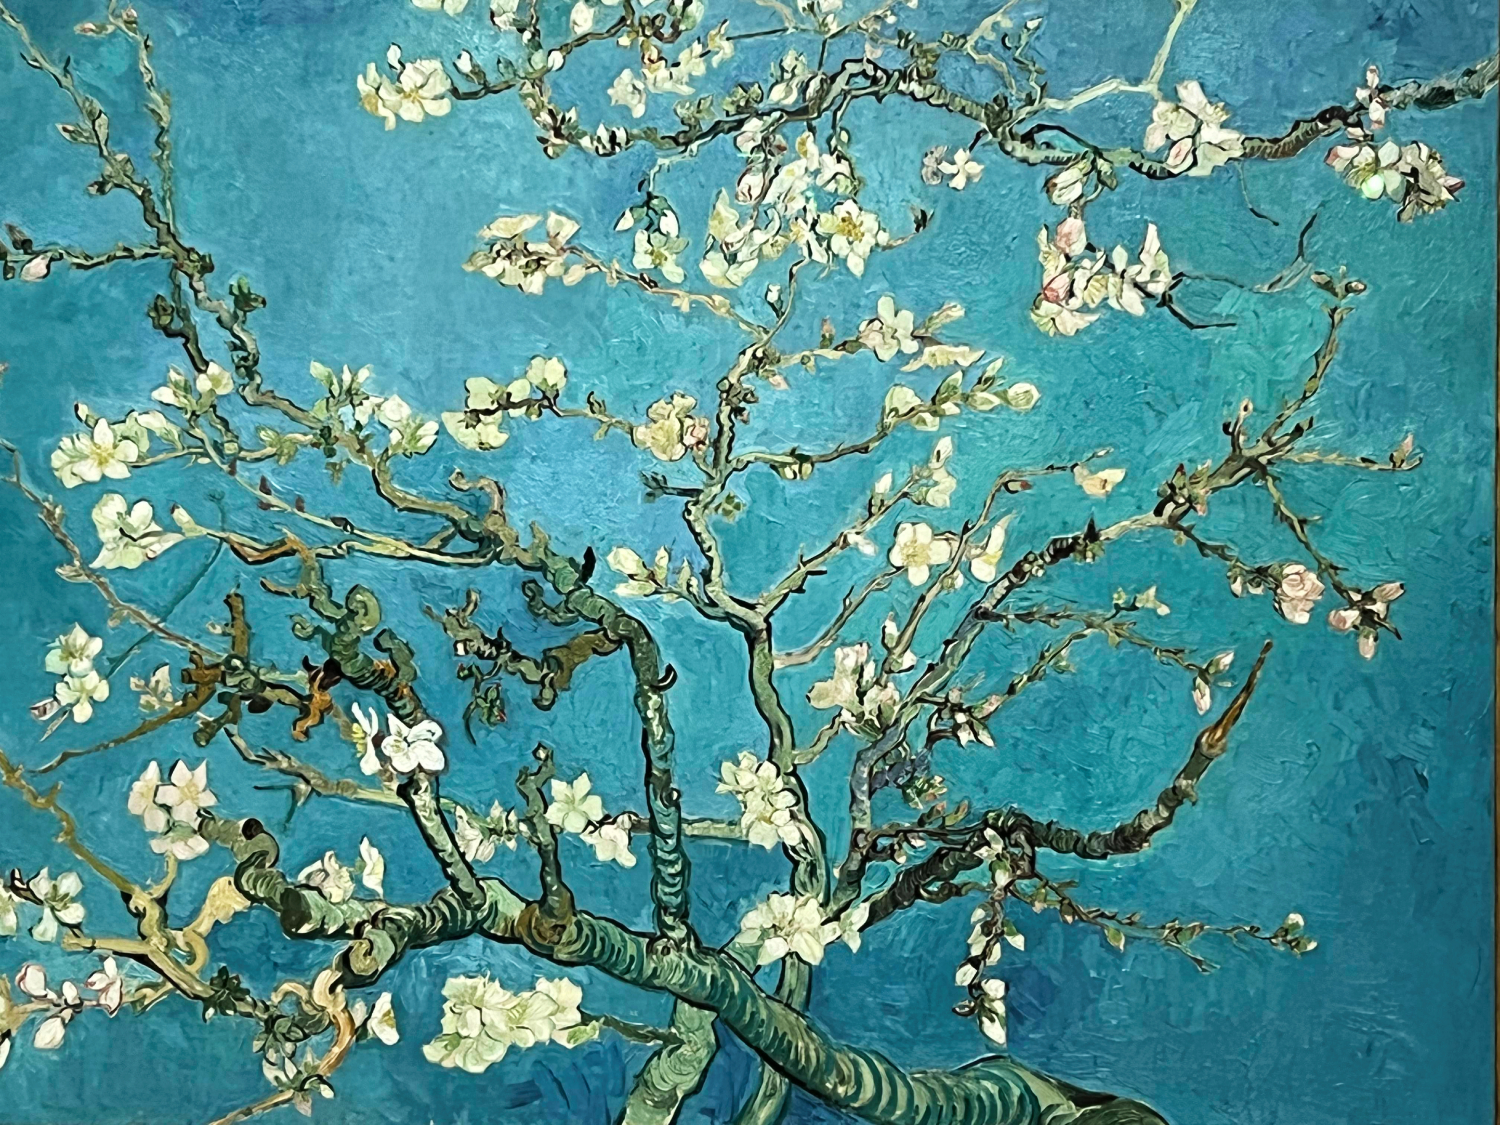 Van Gogh's Almond Blossom